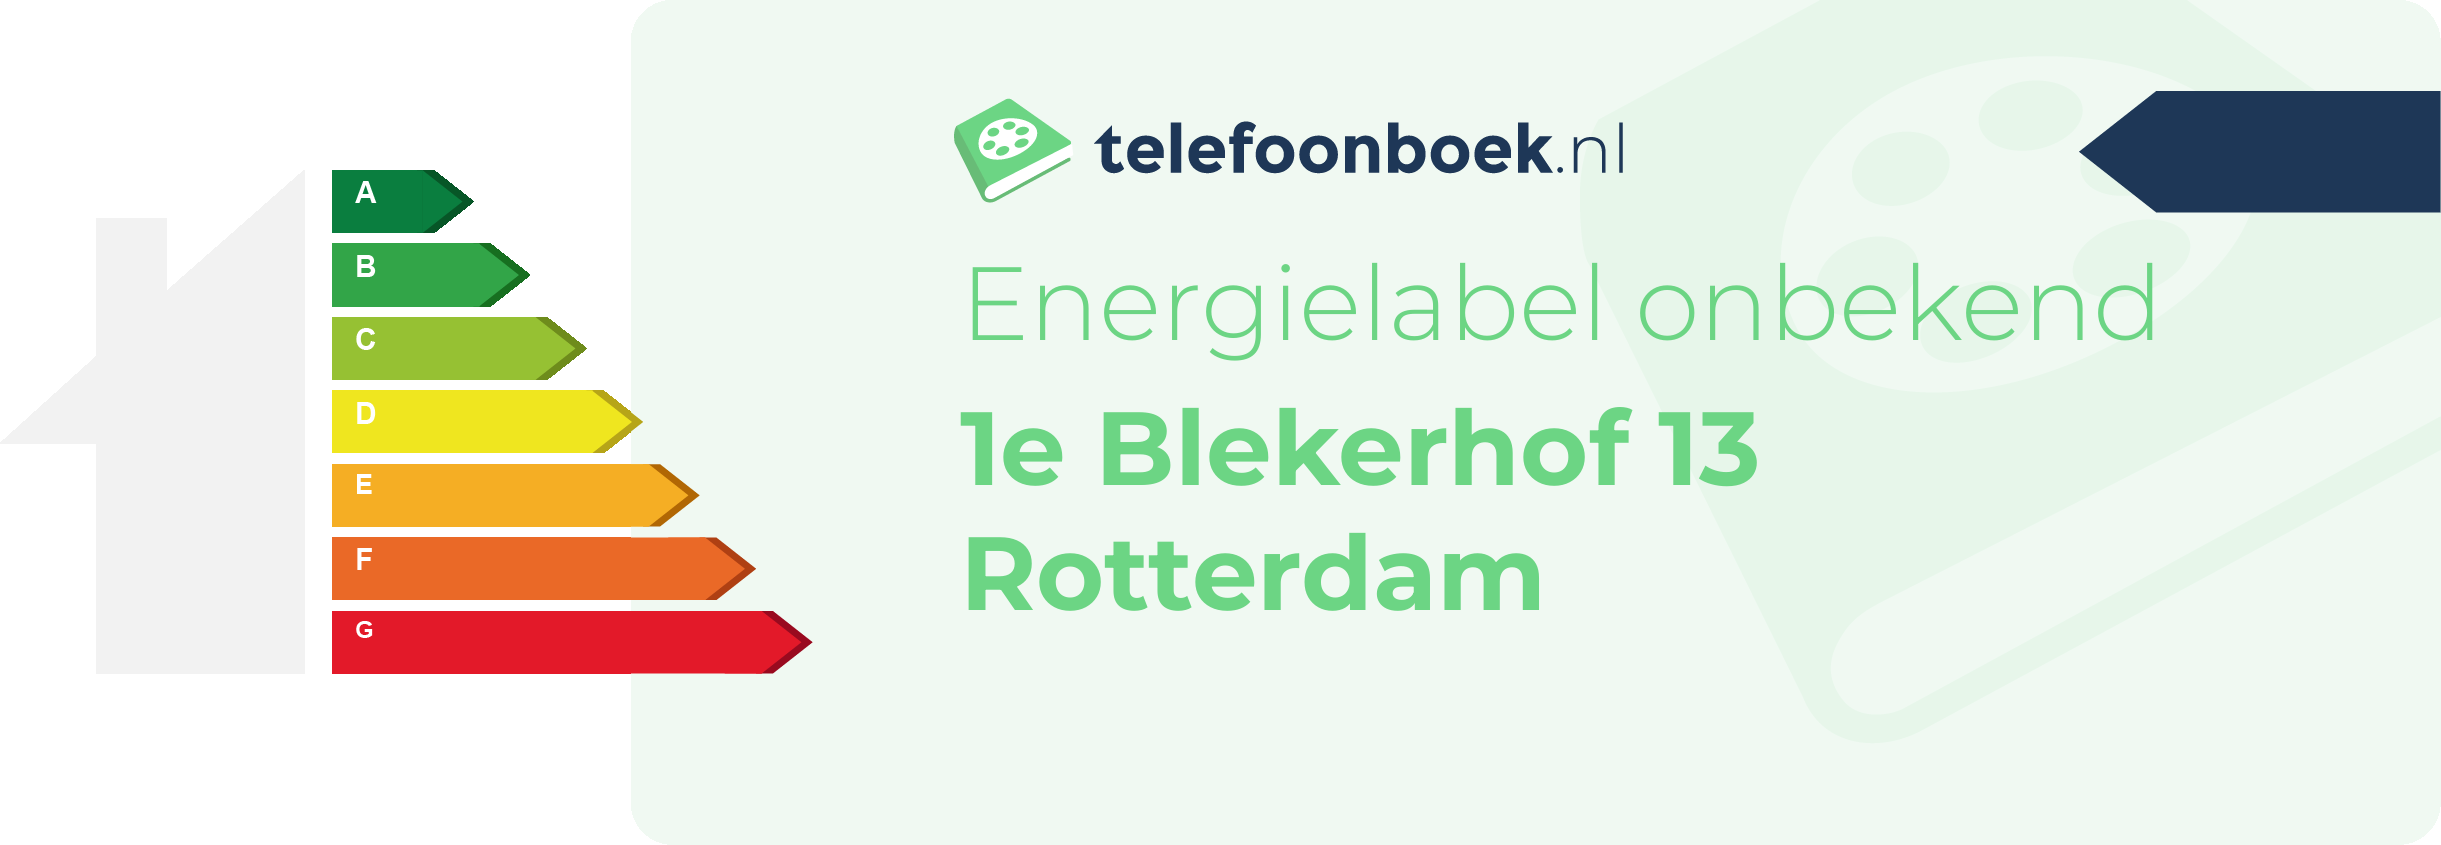 Energielabel 1e Blekerhof 13 Rotterdam